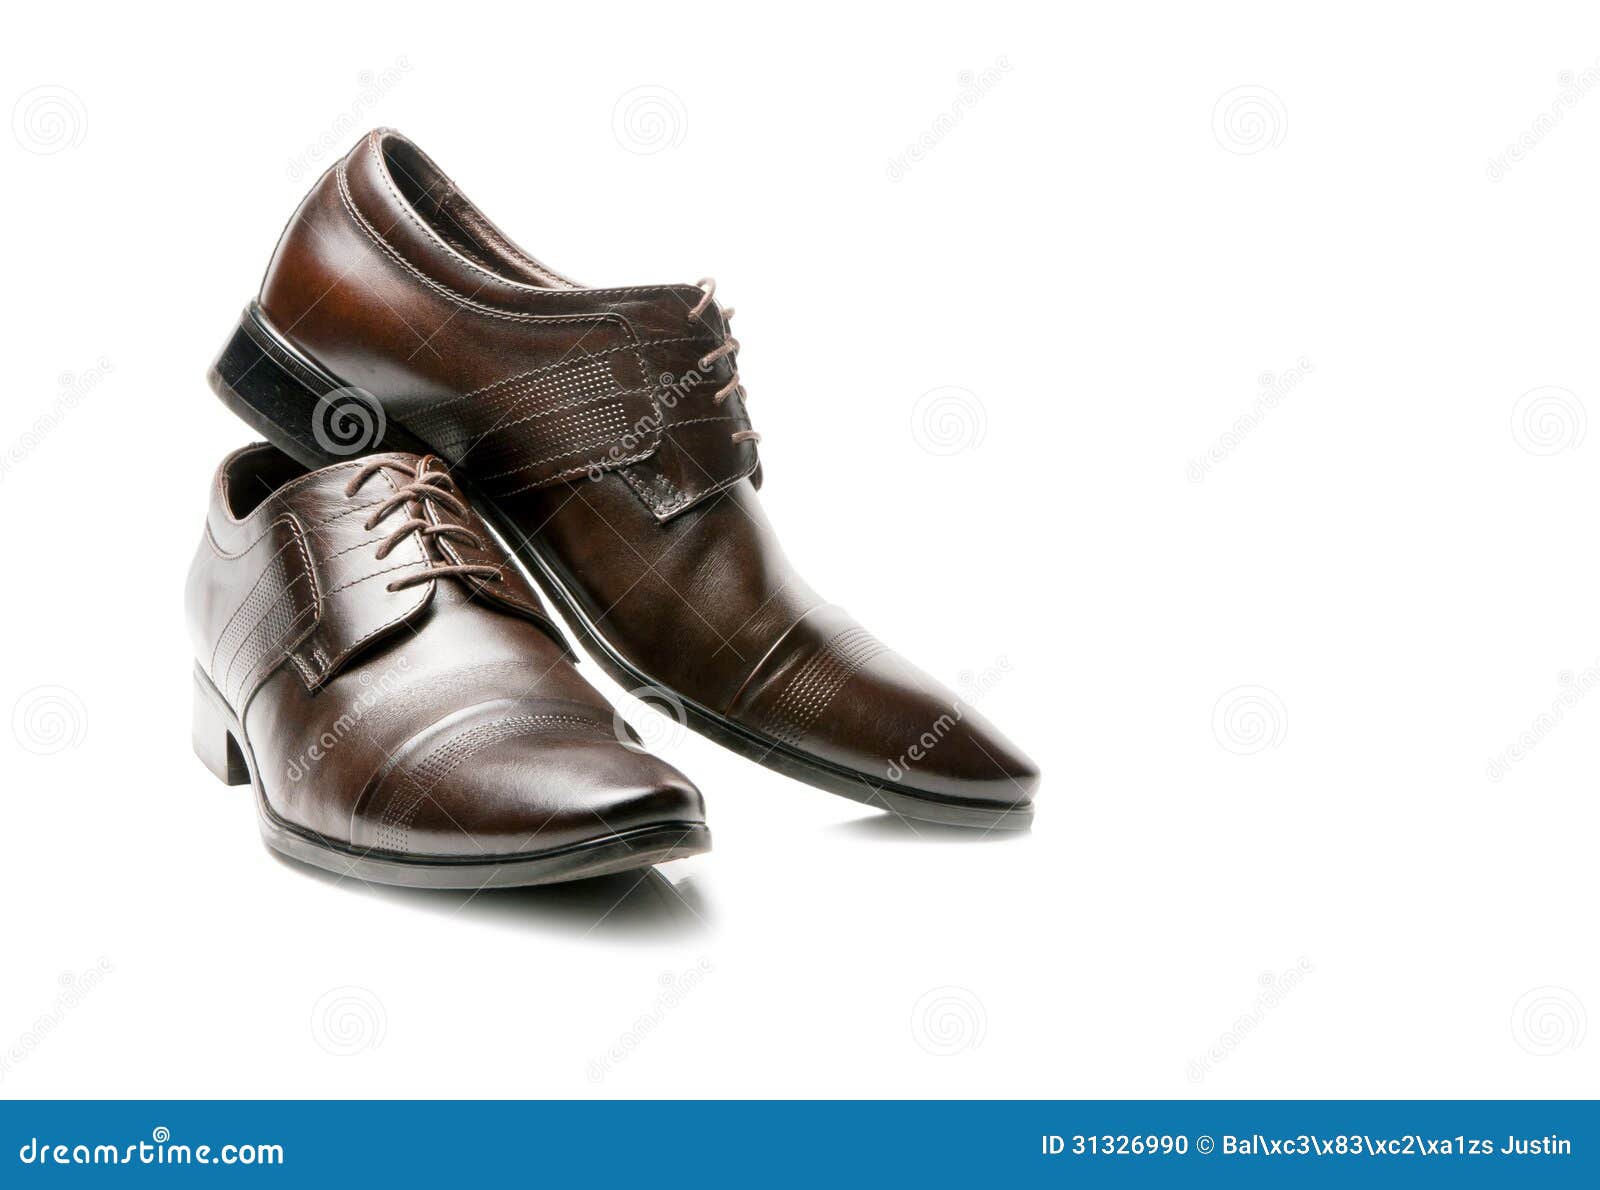 Elegant Brown Leather Men's Shoes. Stock Photo - Image: 31326990